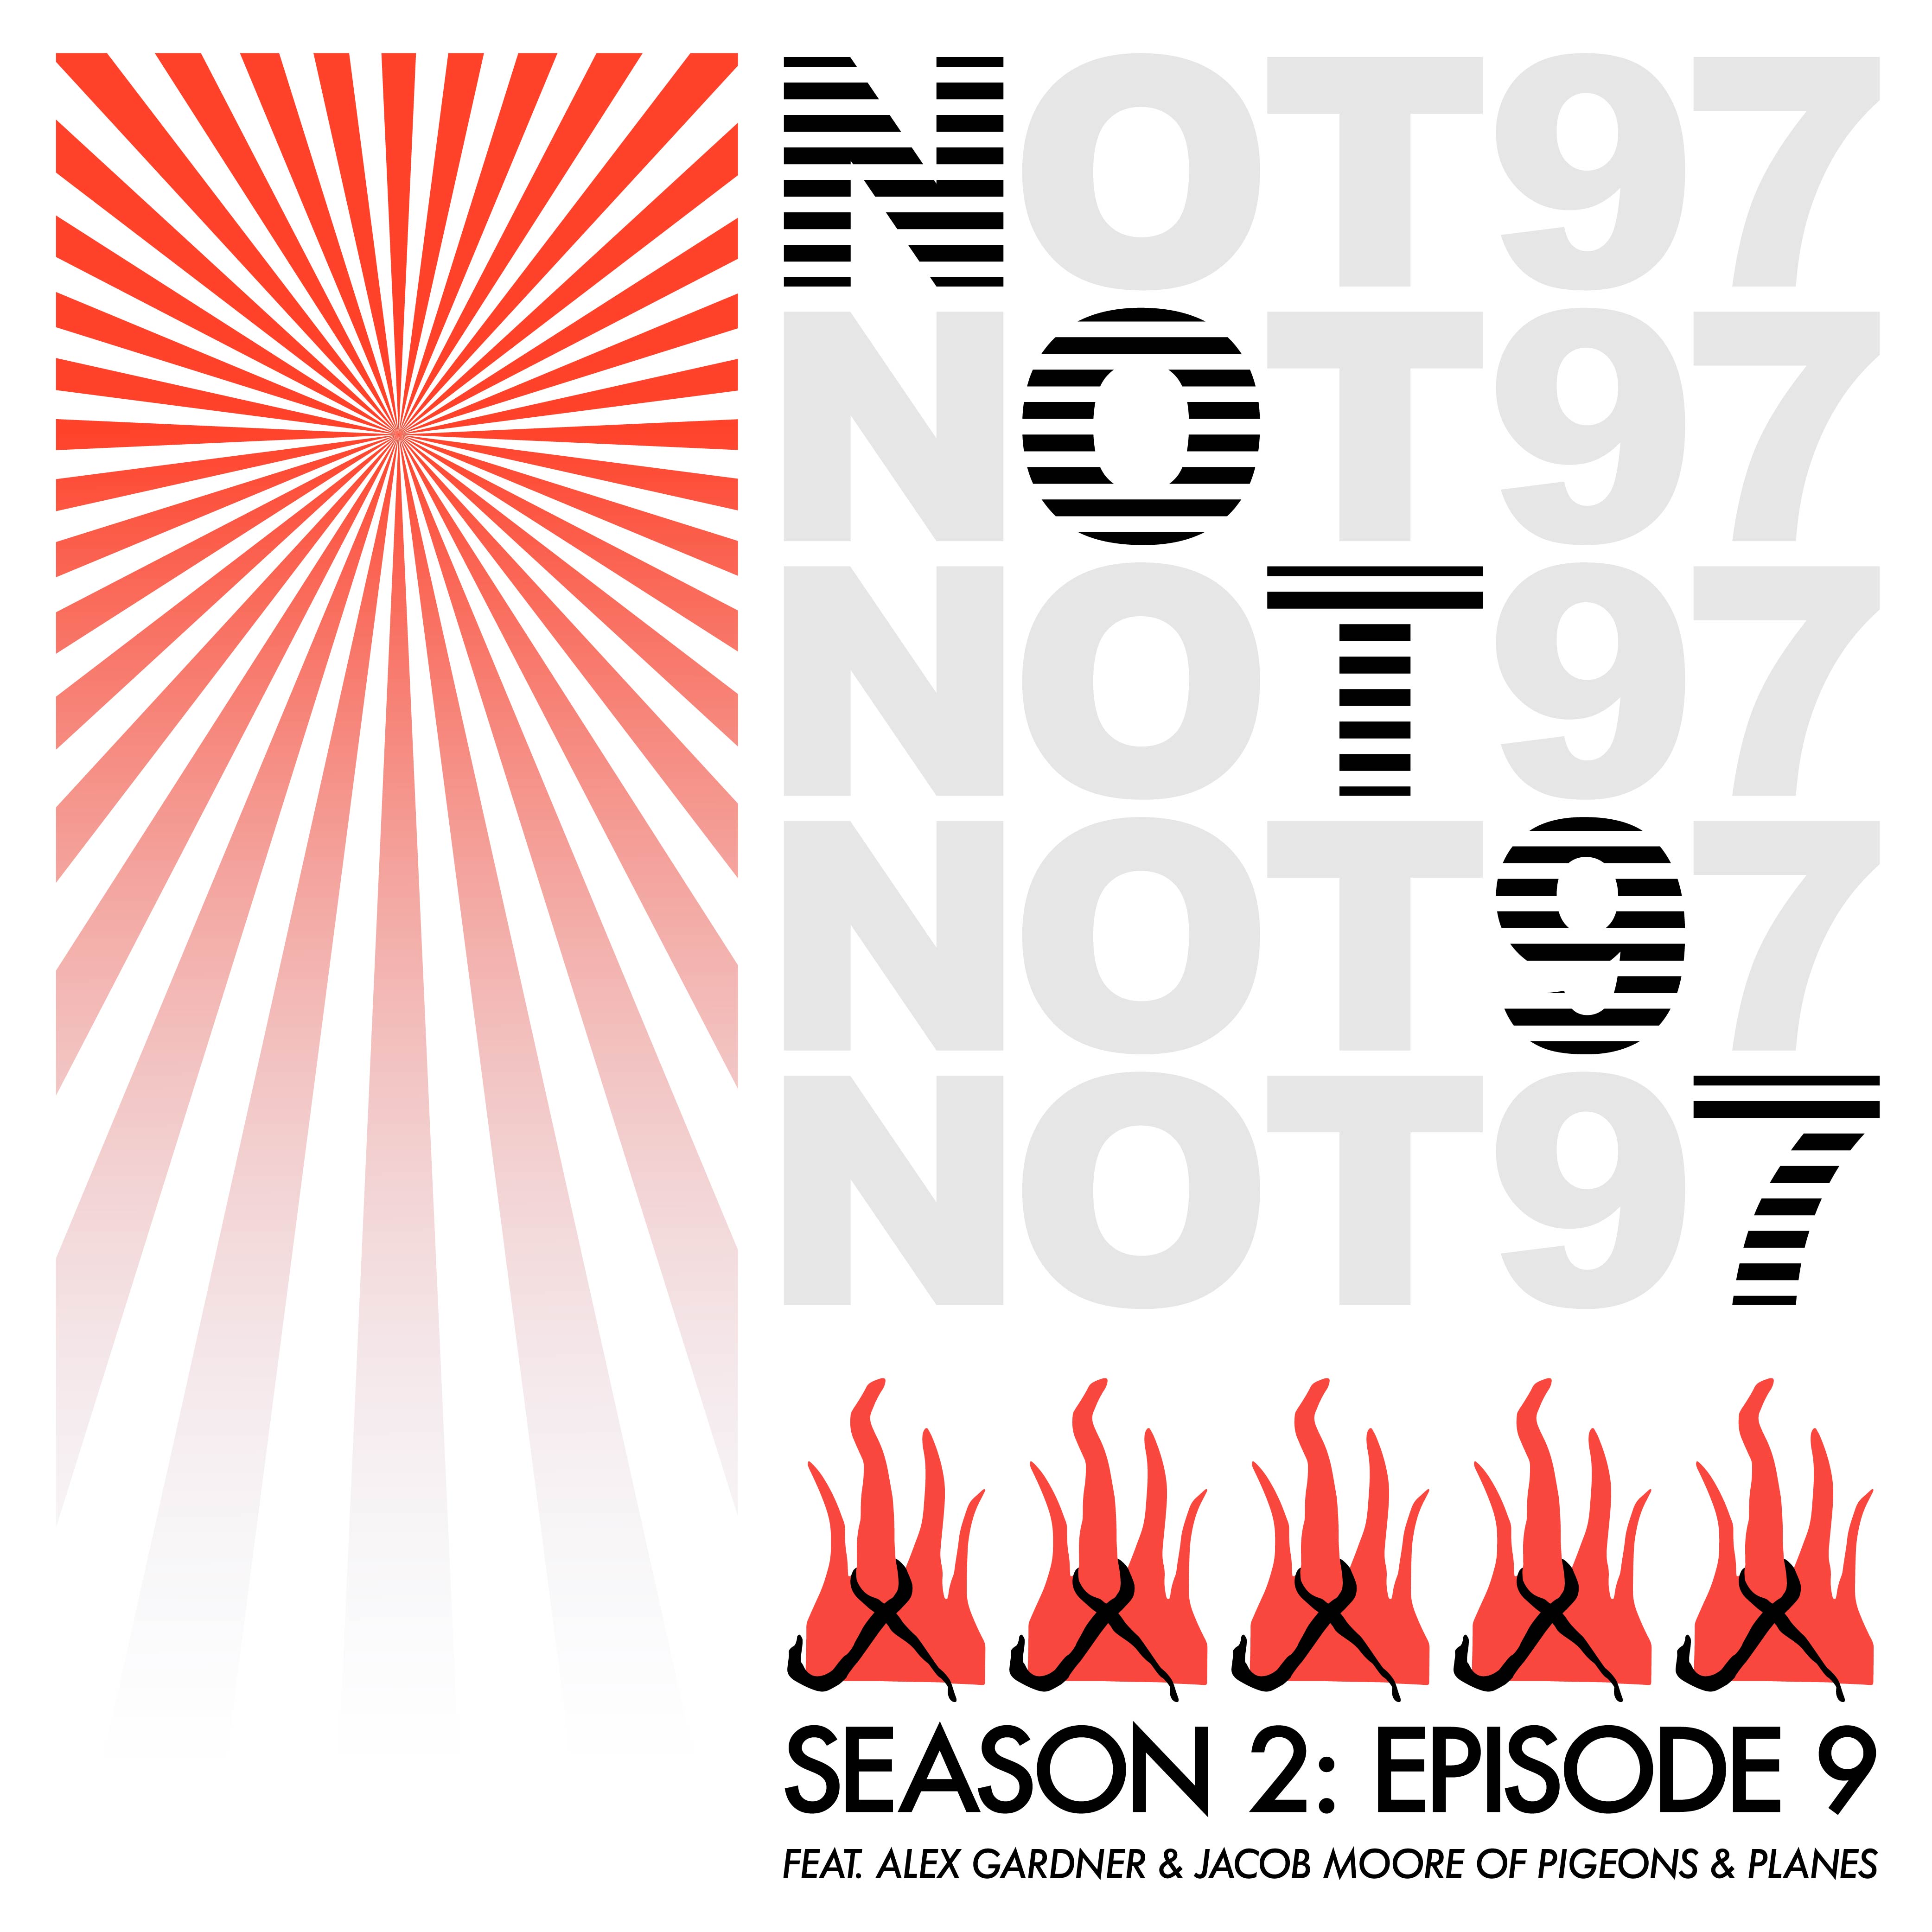  Season Two — Episode Nine (Feat. Pigeons & Planes)